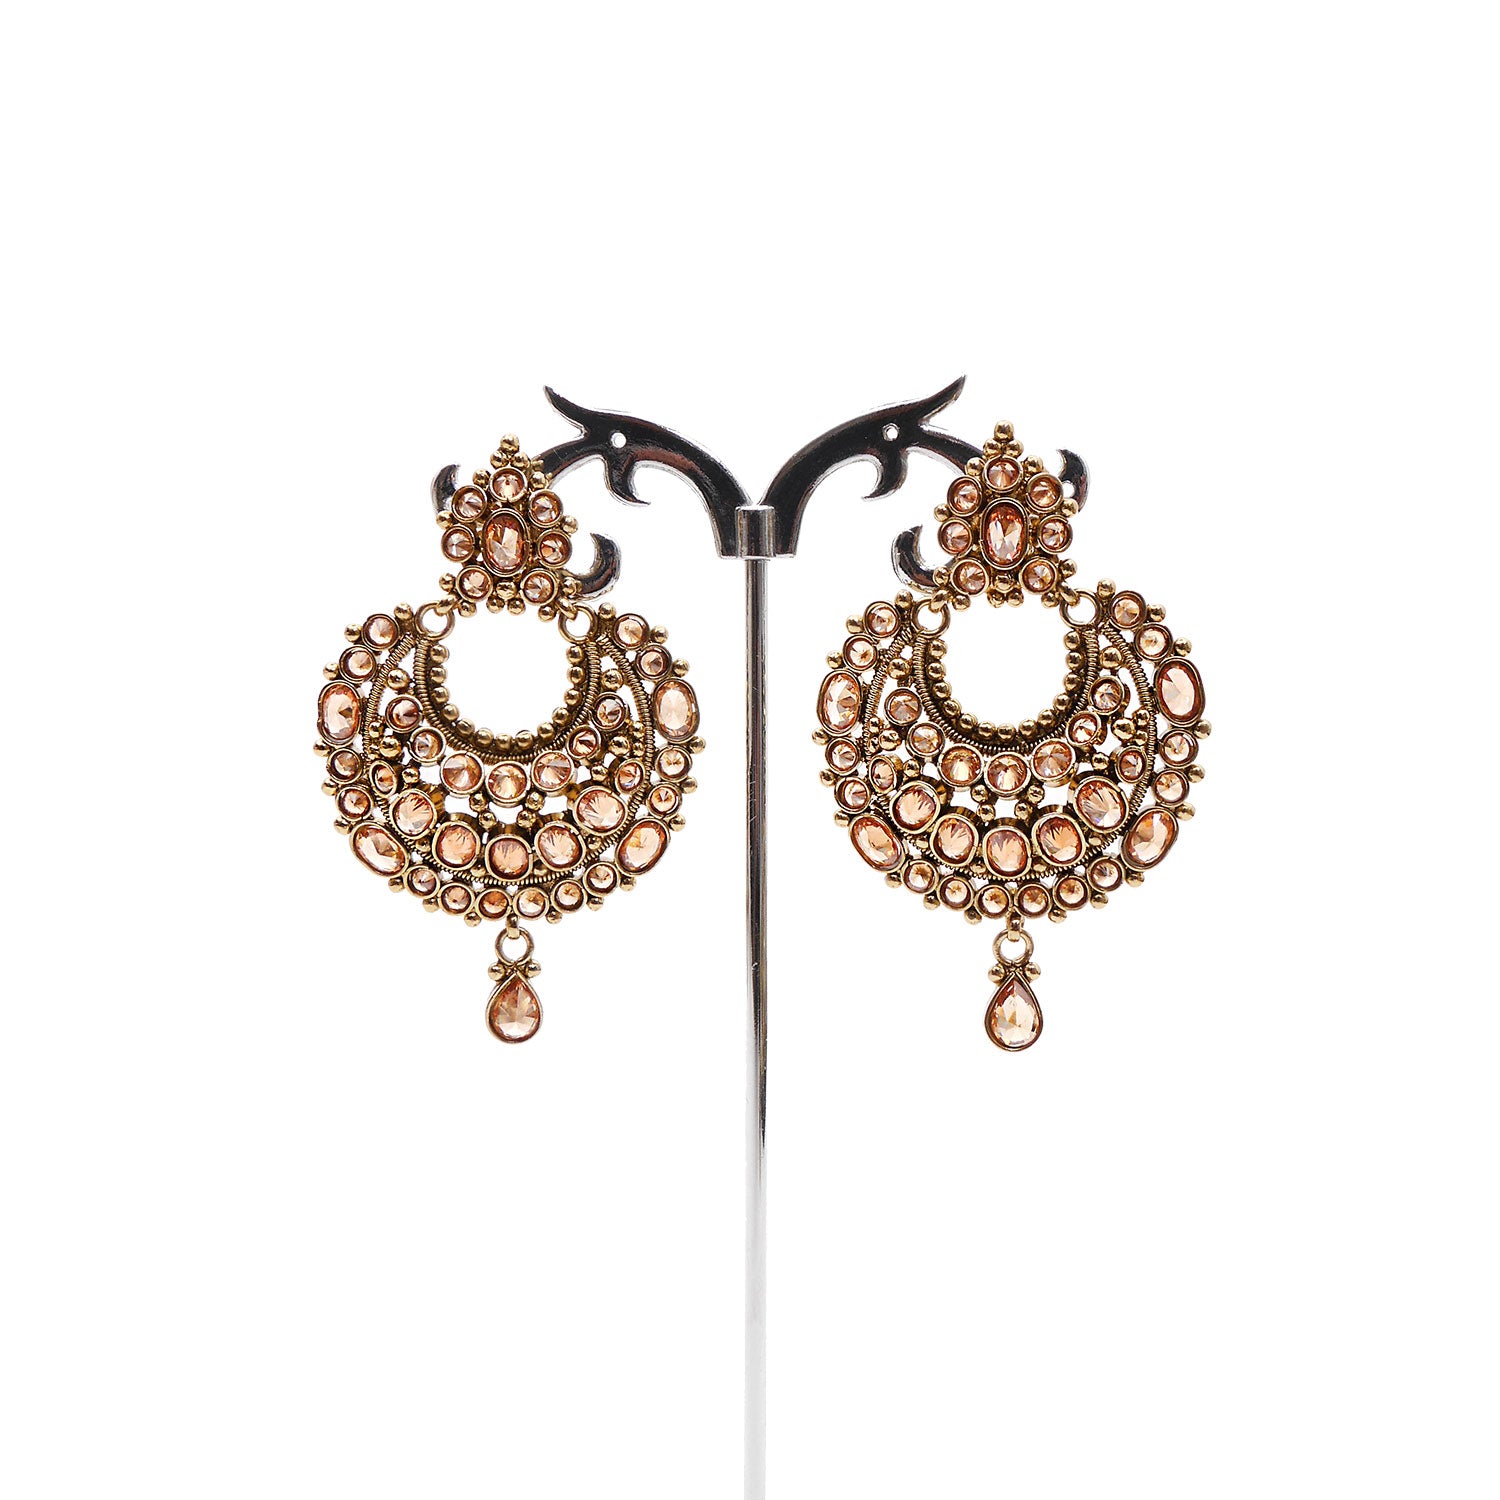 Evani Chandbali Earrings in Antique Gold